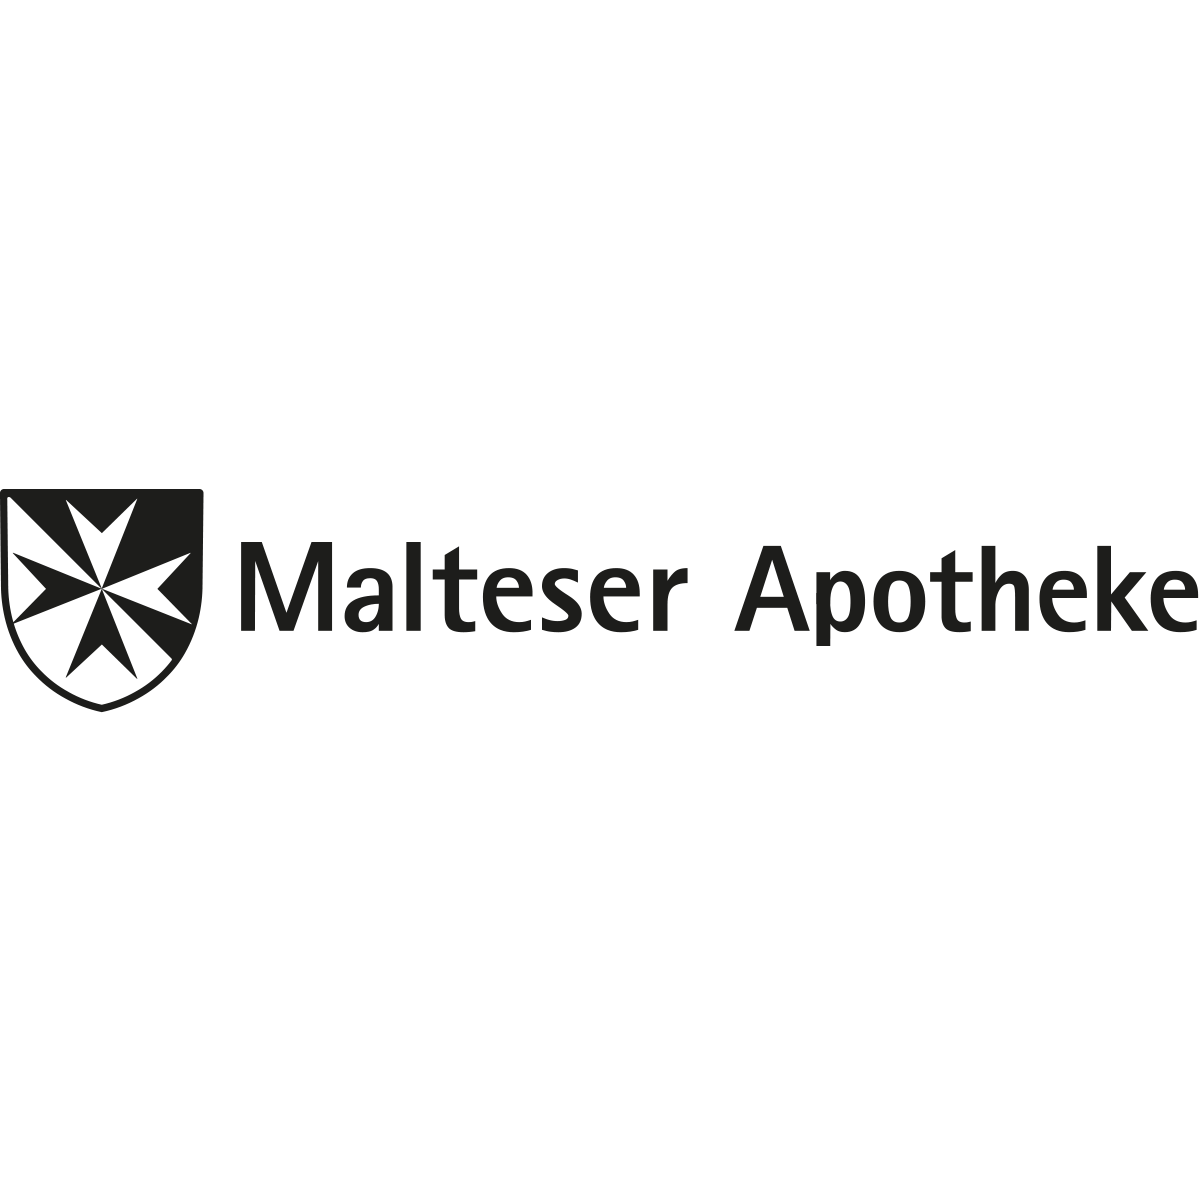 Malteser Apotheke